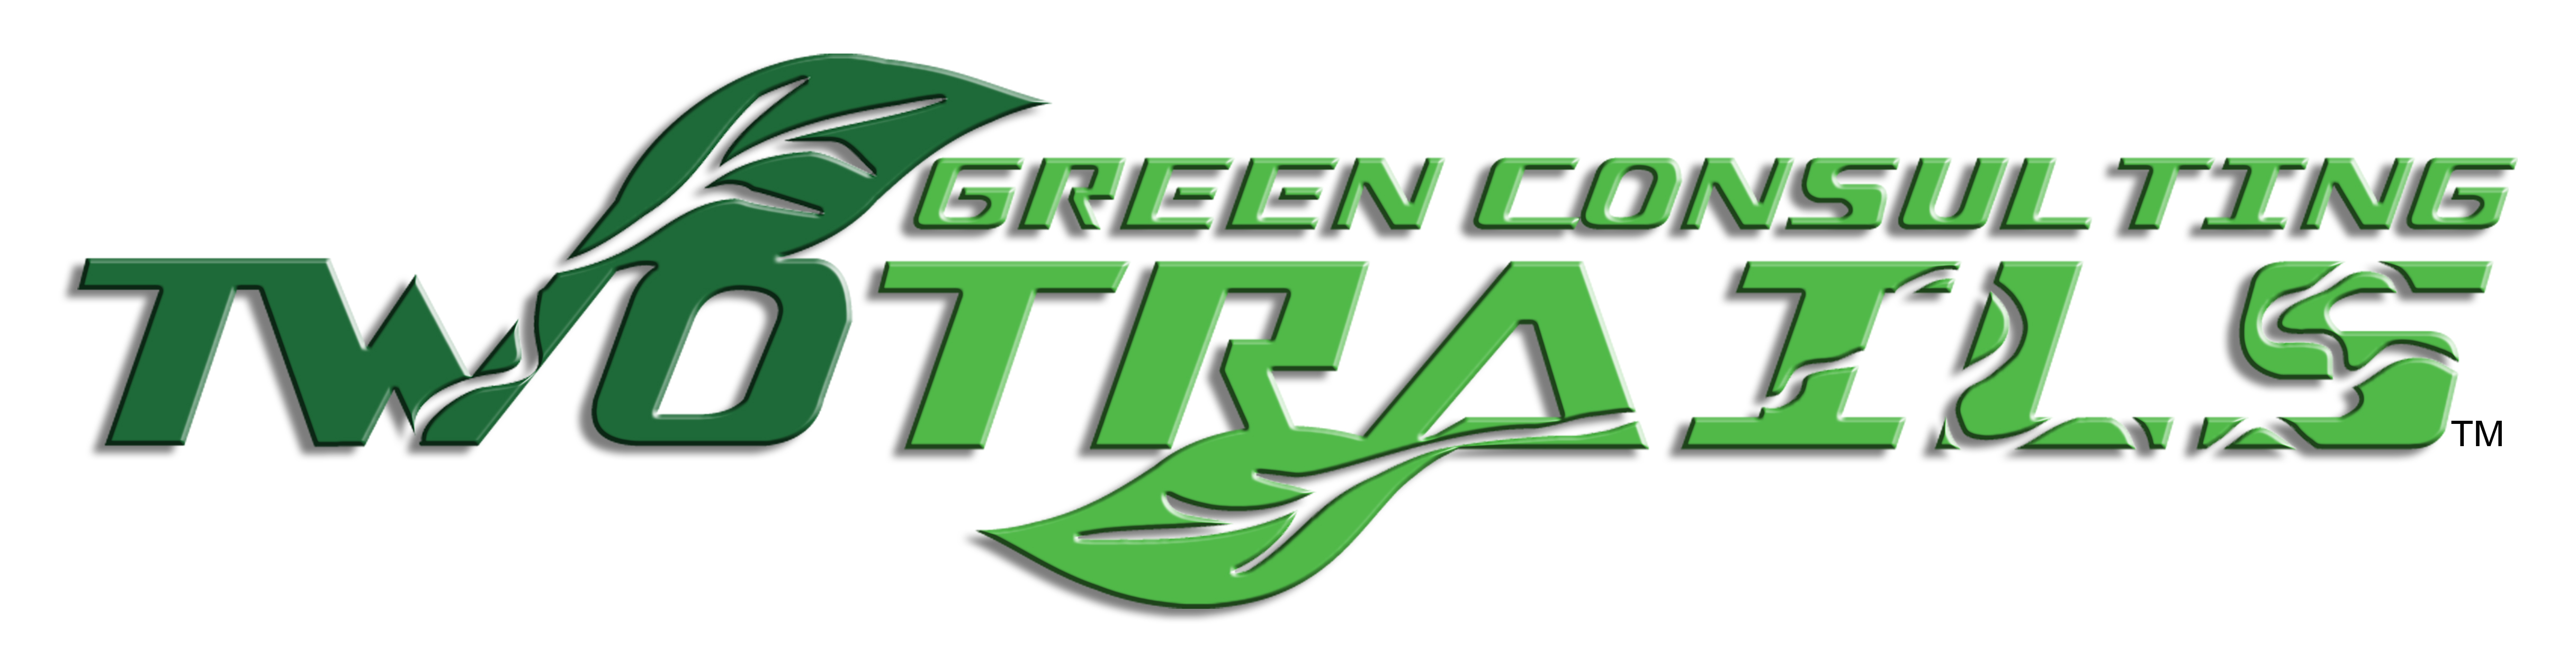 Two Trails, Inc. company logo